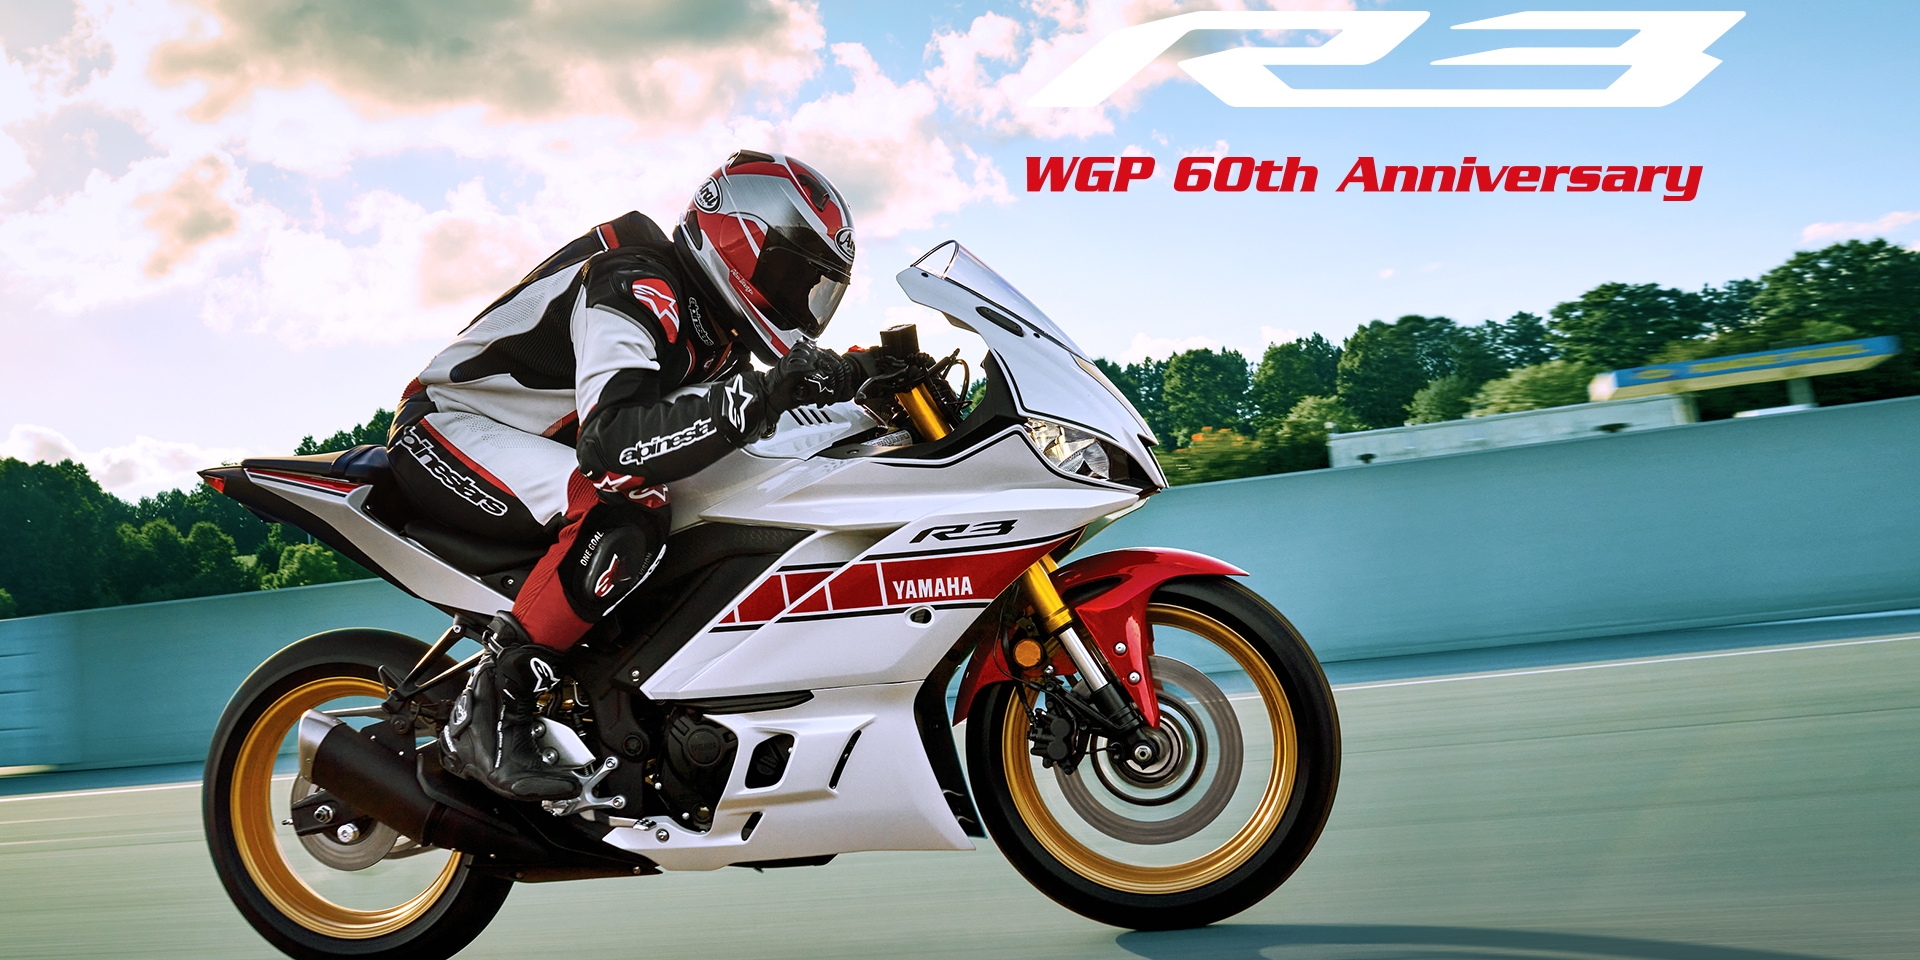 限量240輛 ! YAMAHA YZF-R3 WGP 60th Anniversary 日本發售